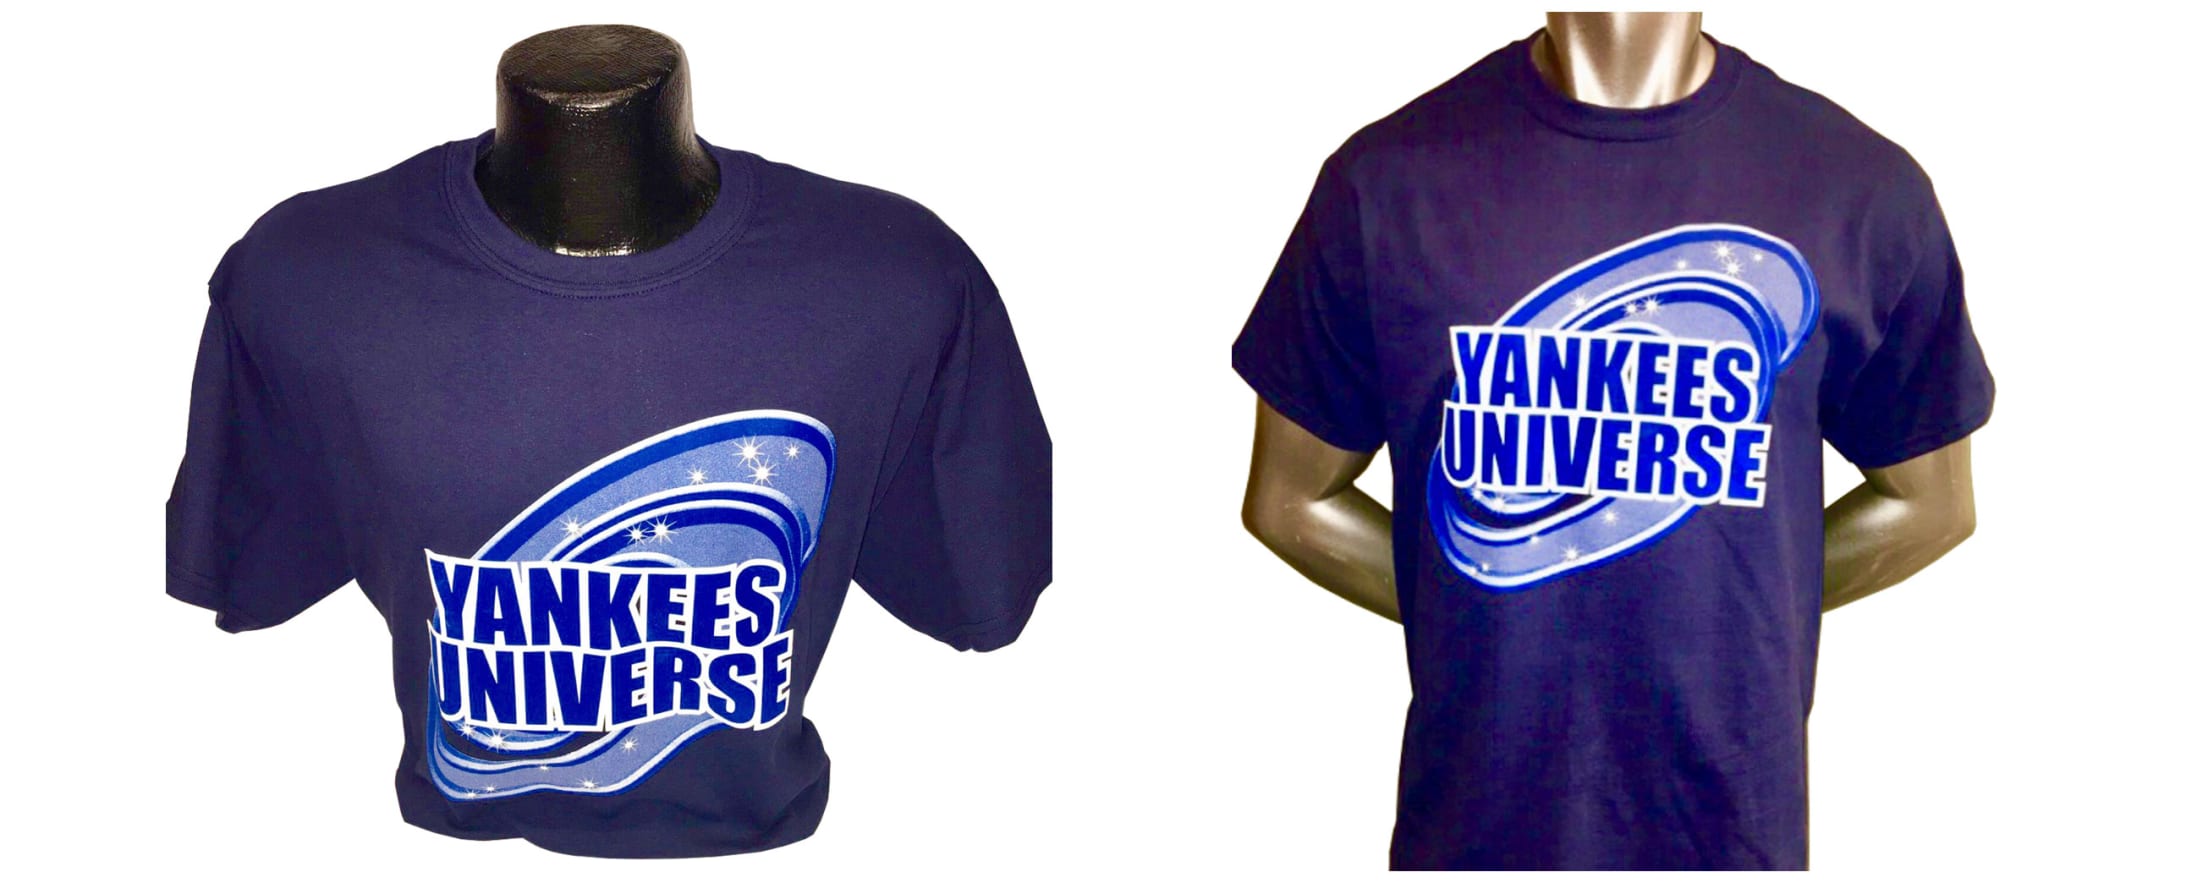 Yankees Universe Fundraiser